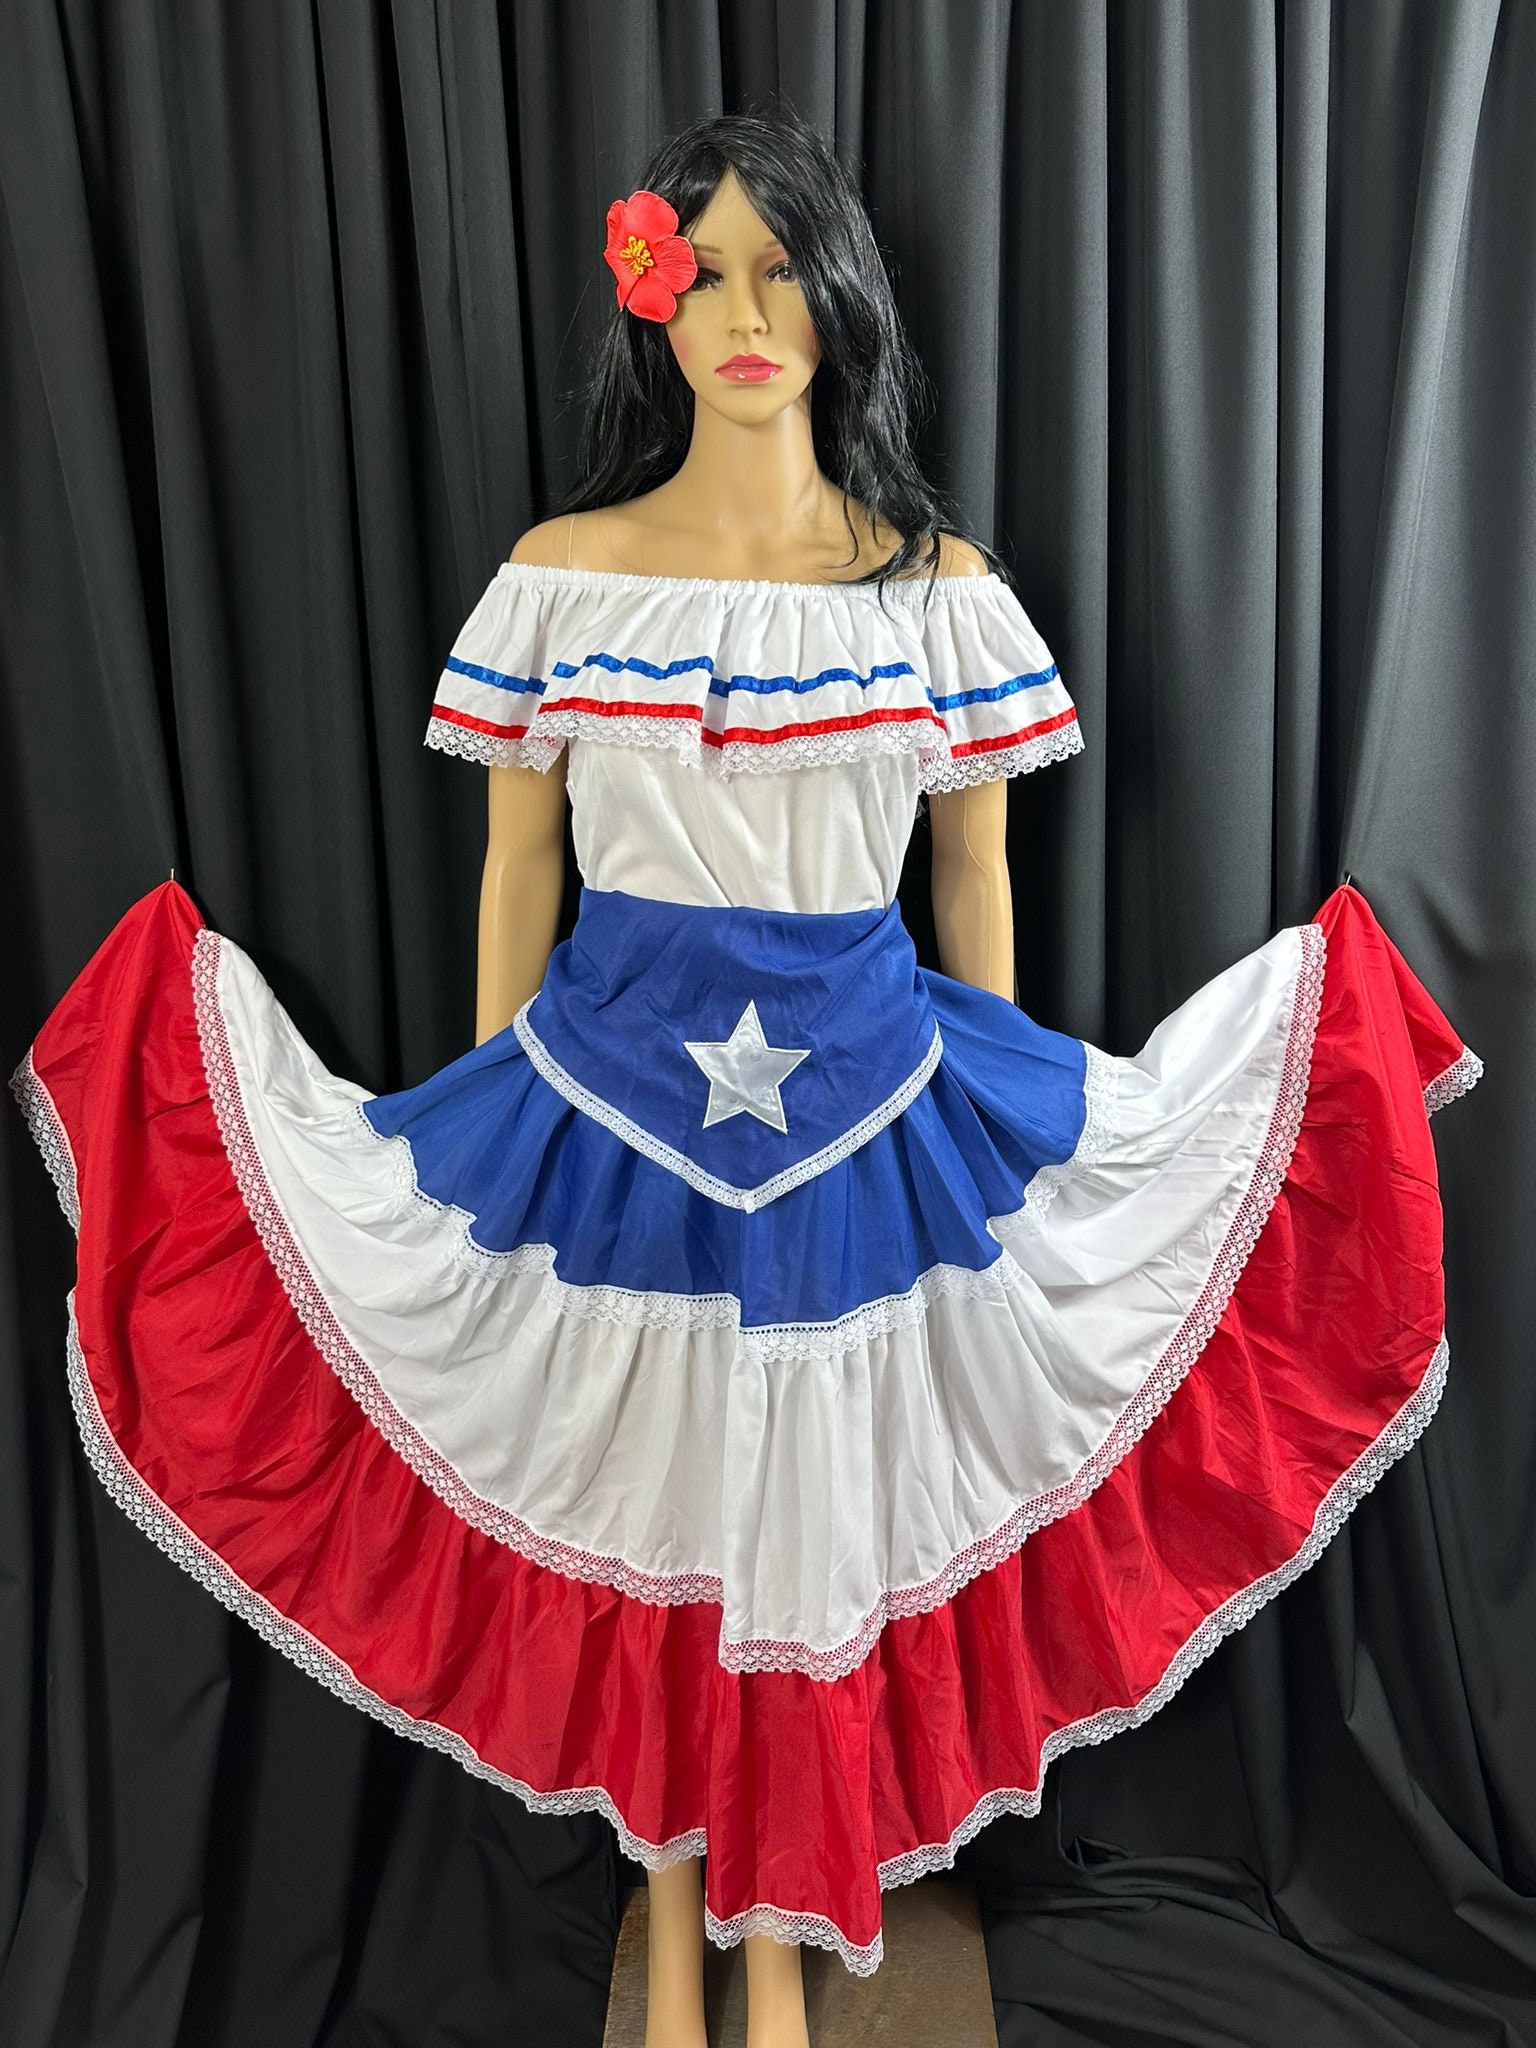 Enchanting Puerto Rico Dress Embracing Cultural Heritage image